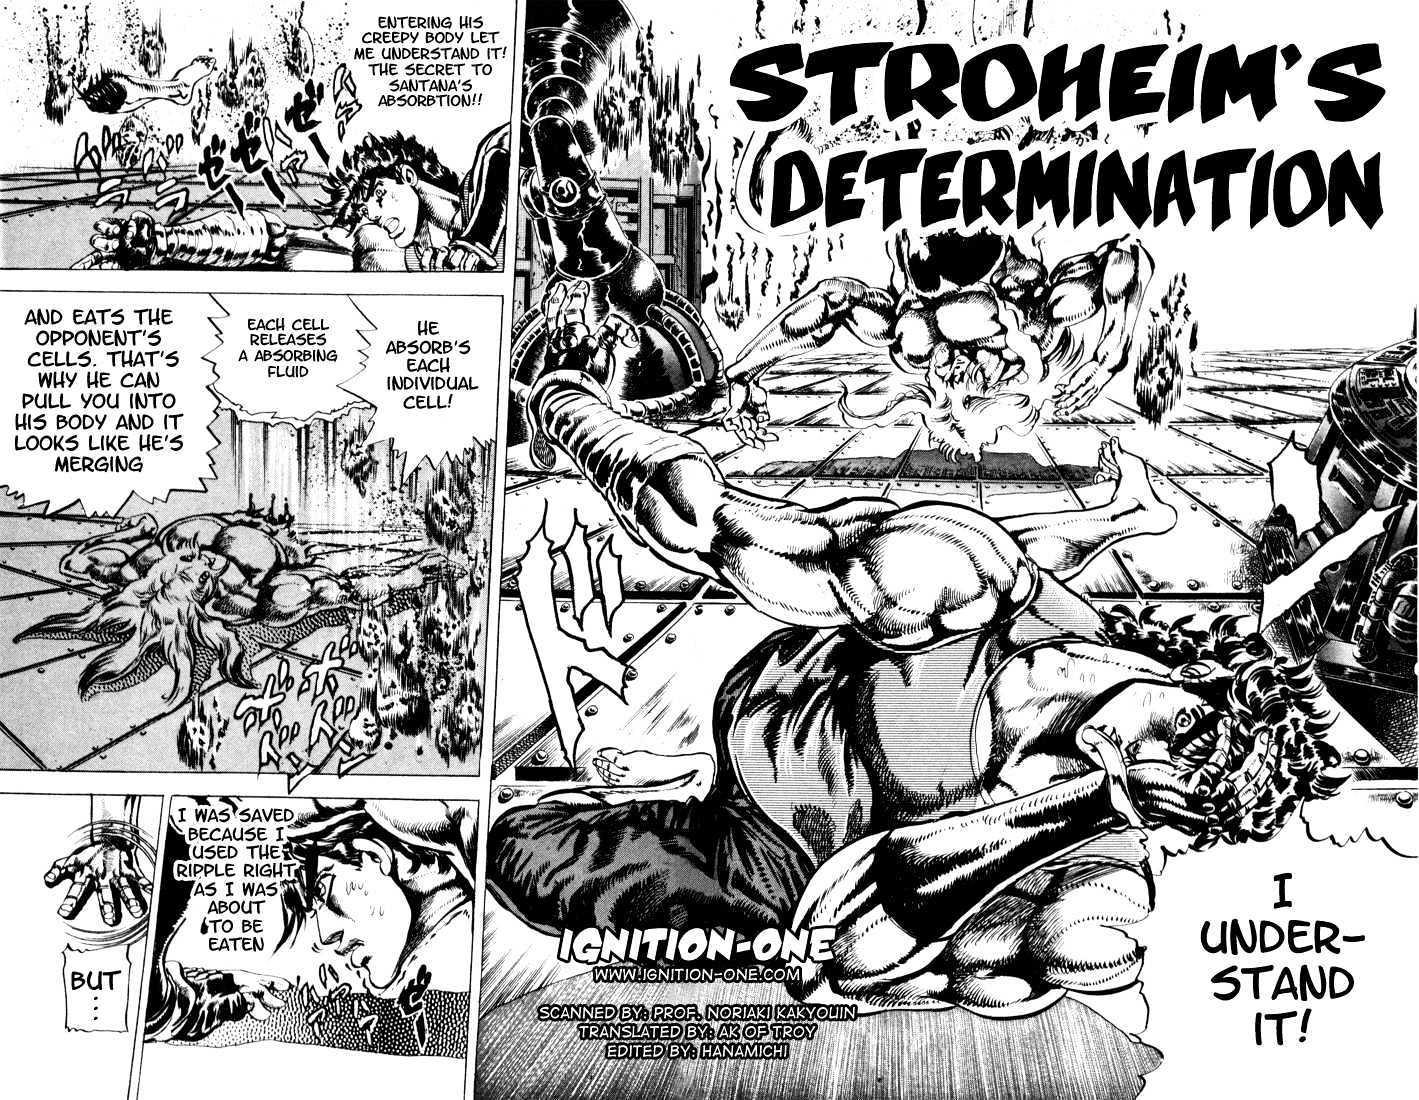 Jojo's Bizarre Adventure Vol.7 Chapter 60 : Stroheim's Determination page 3 - 